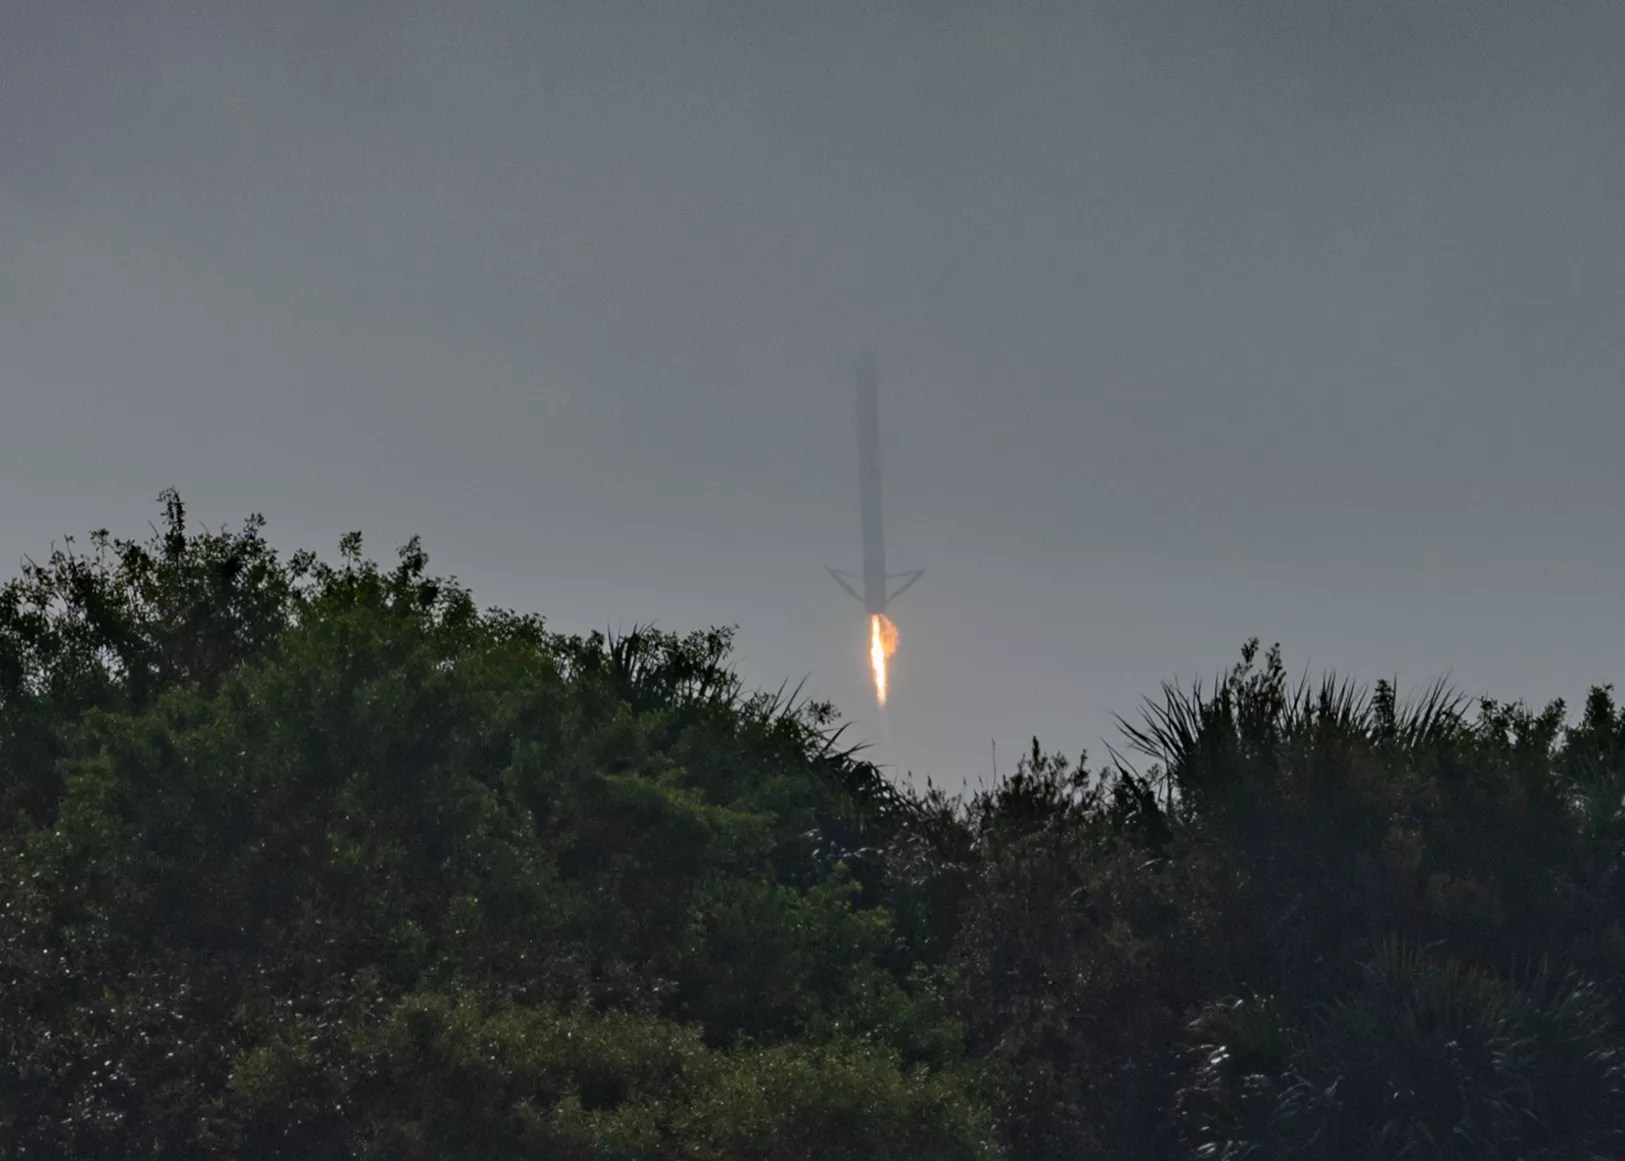 SpaceX показала фото зі старту потужної ракети Falcon Heavy